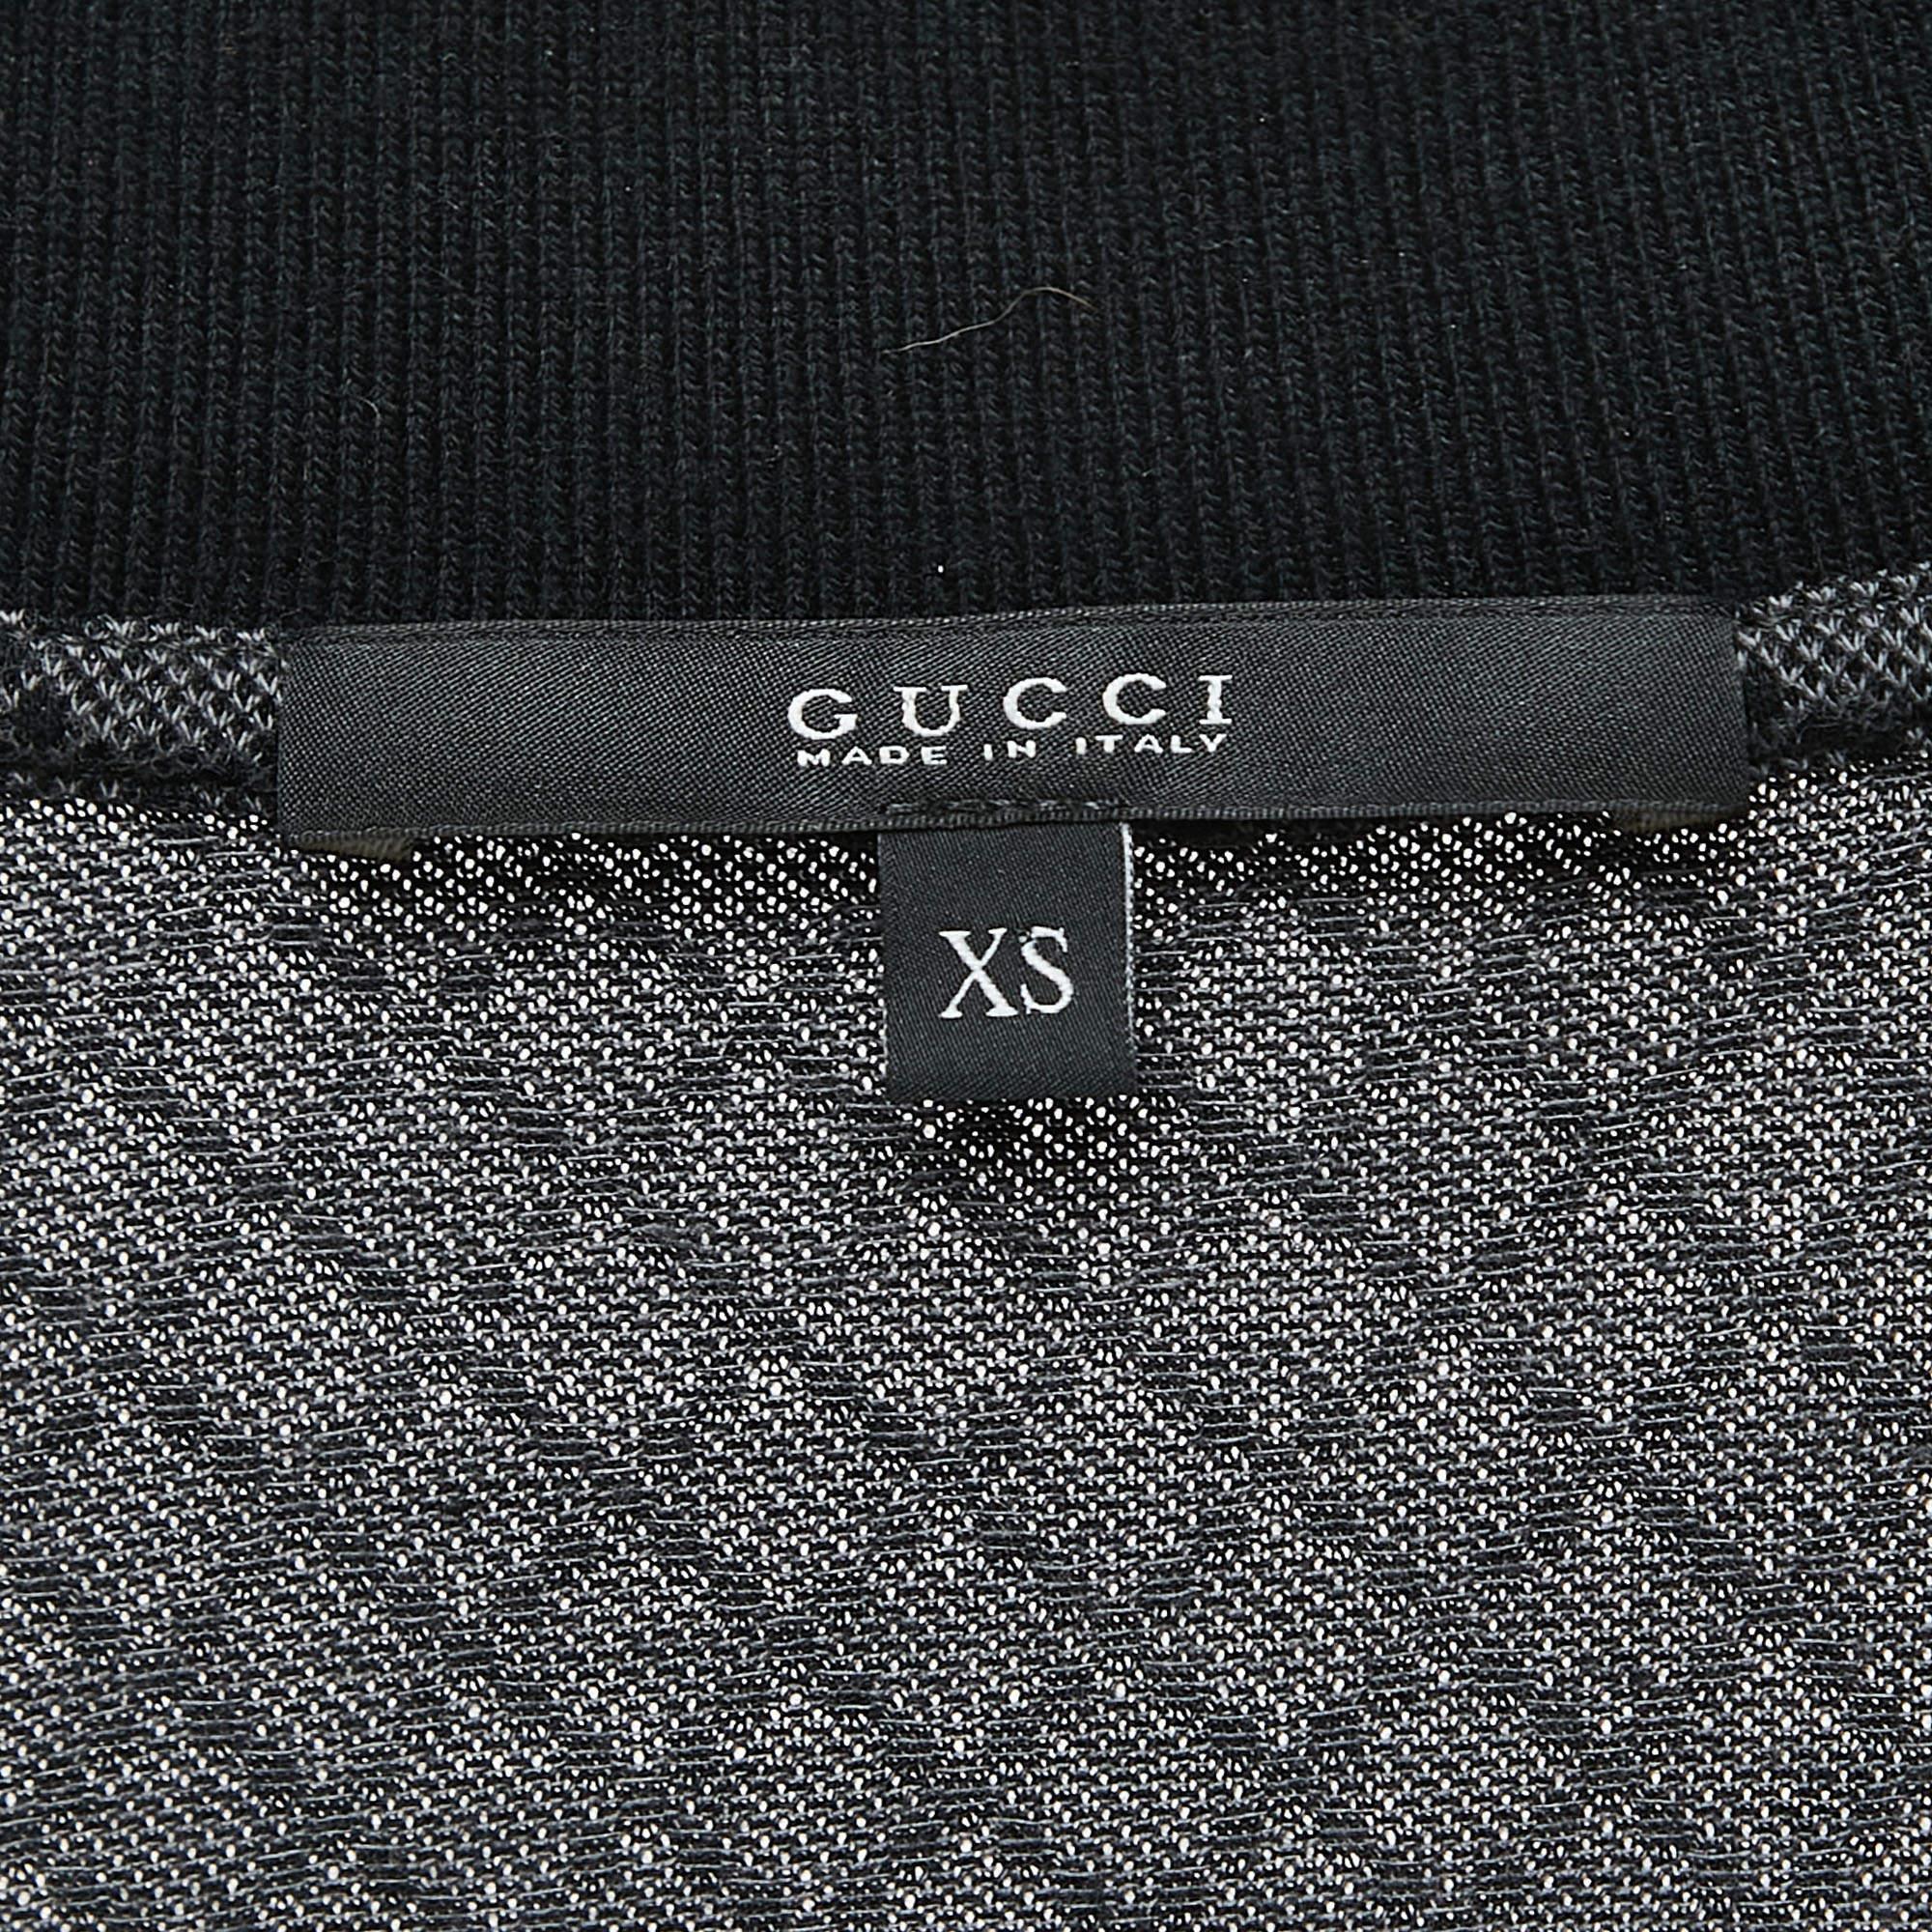 Men's Gucci Black Patterned Cotton Web Stripe Detailed Polo T-Shirt XS